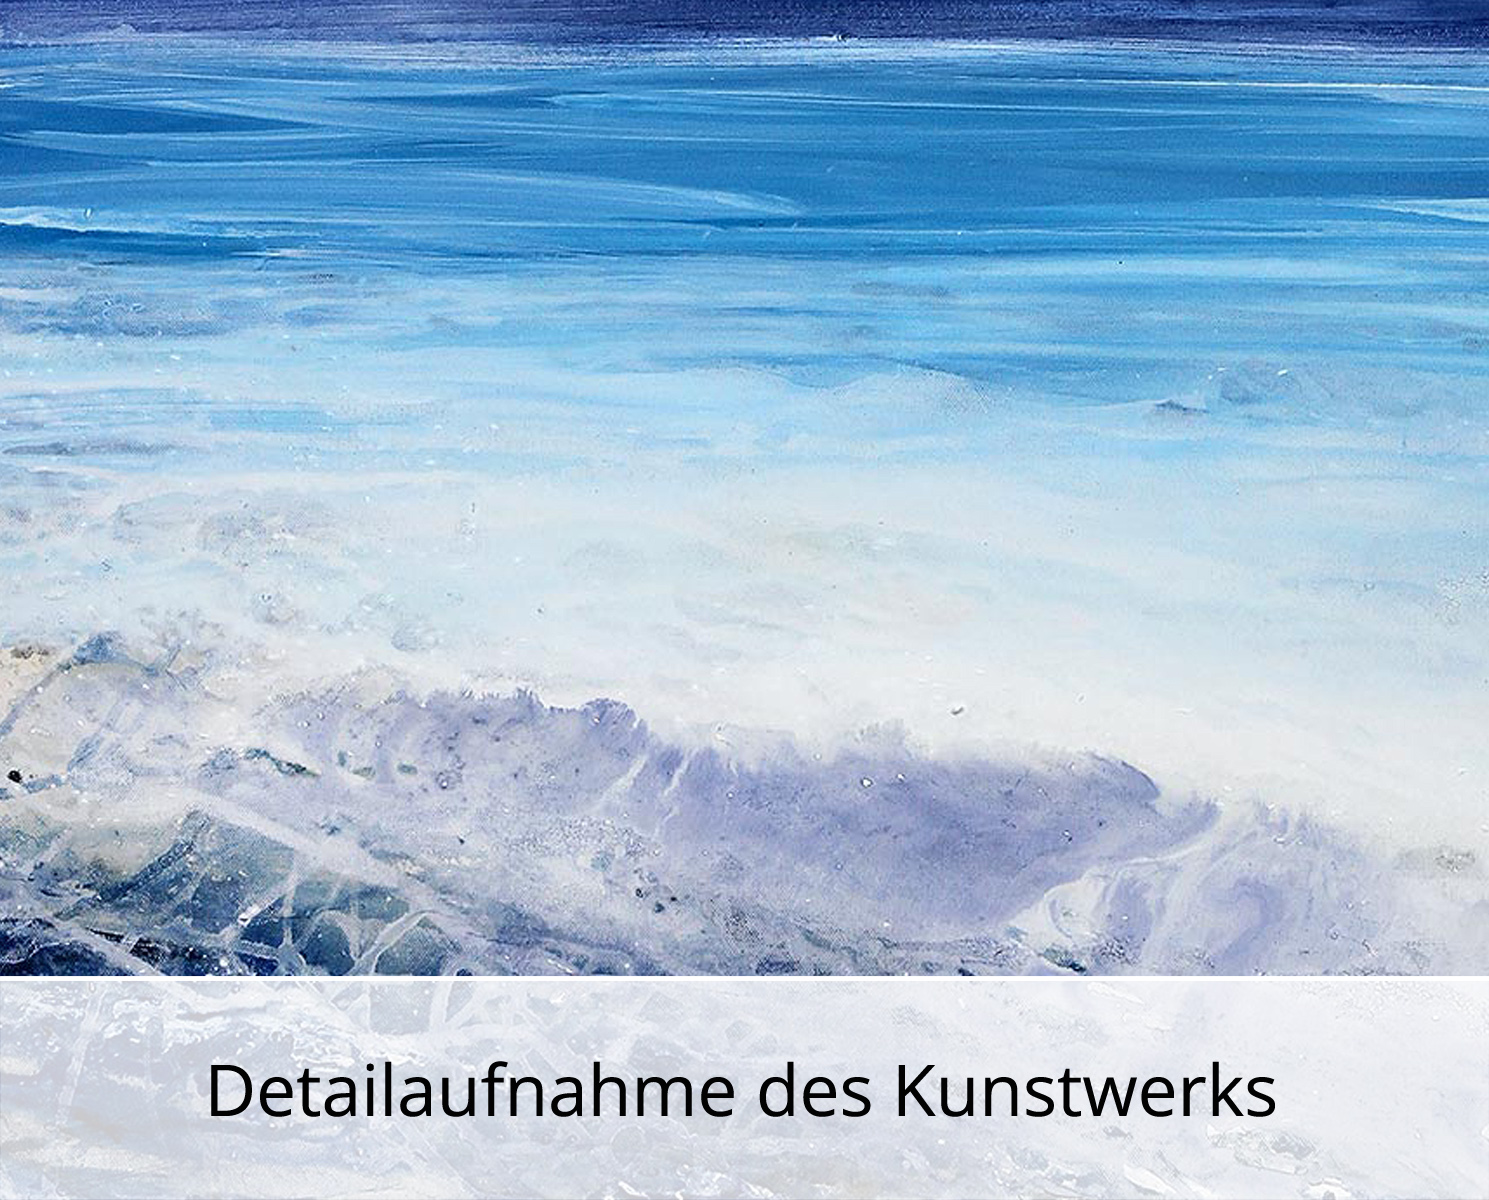 M. Kühne: "Vor dem Sturm", Edition, signierter Kunstdruck